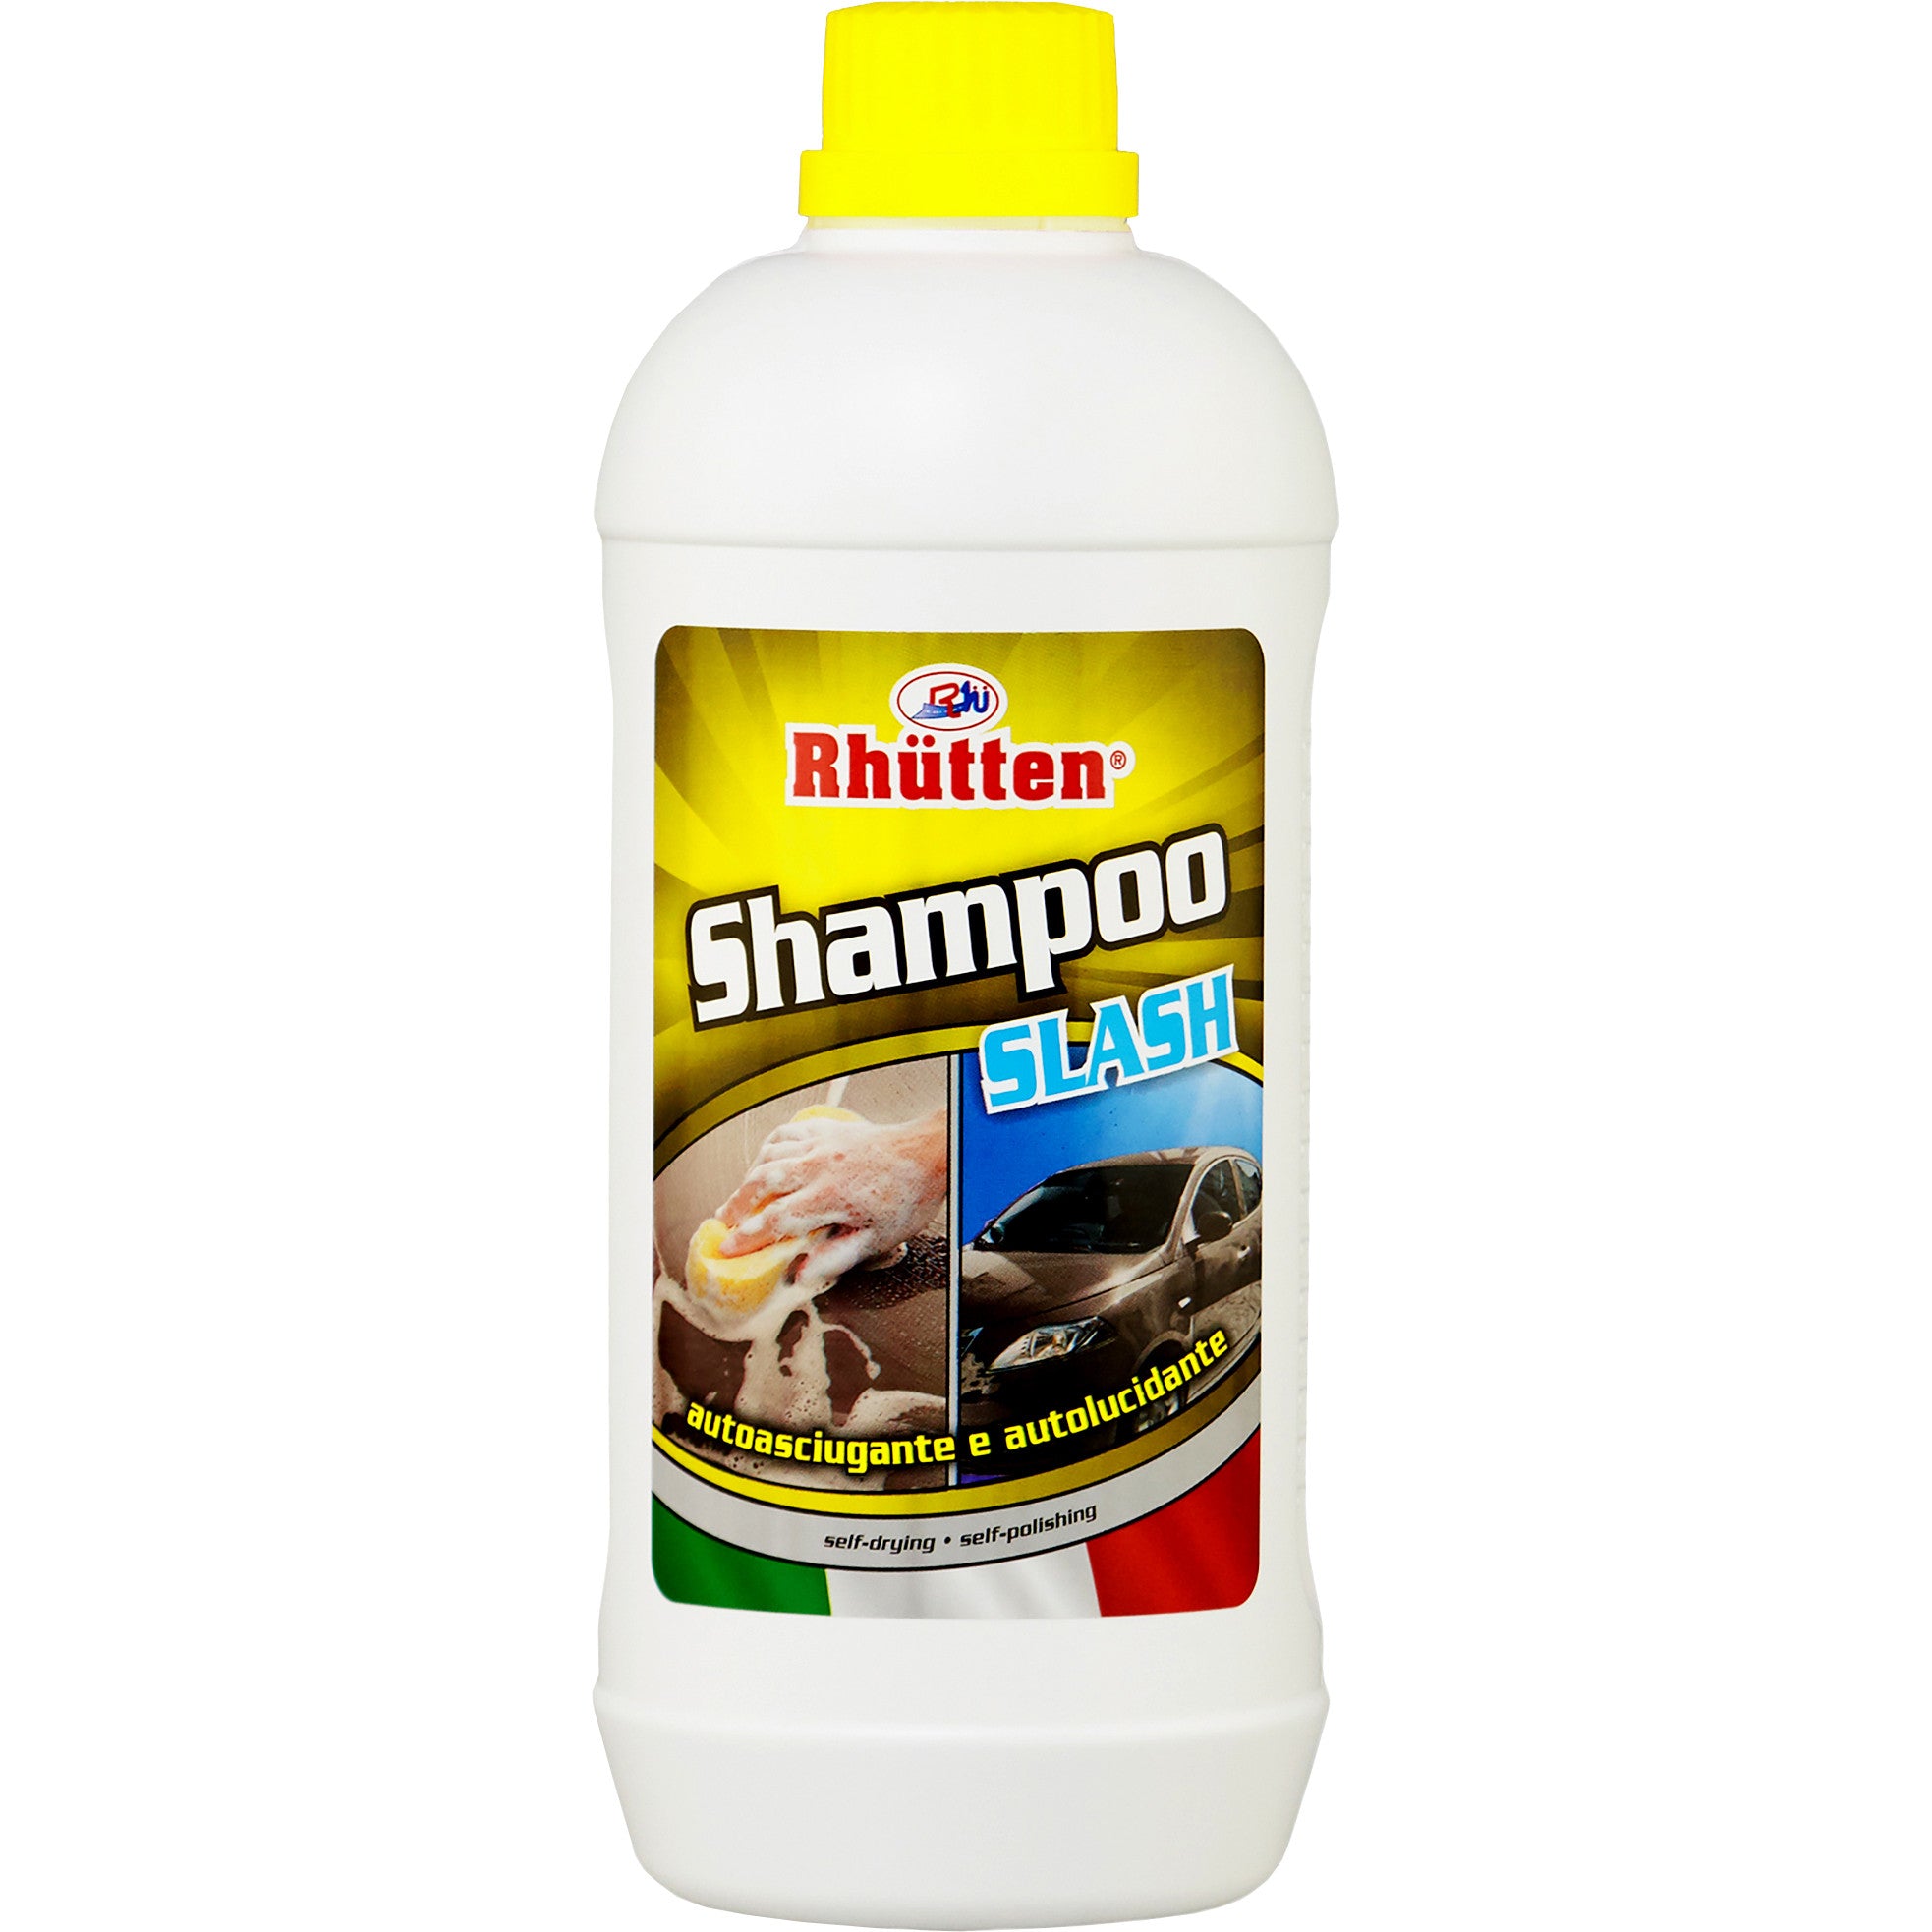 Rhutten shampoo slash autolucidant/autoa.lt.1